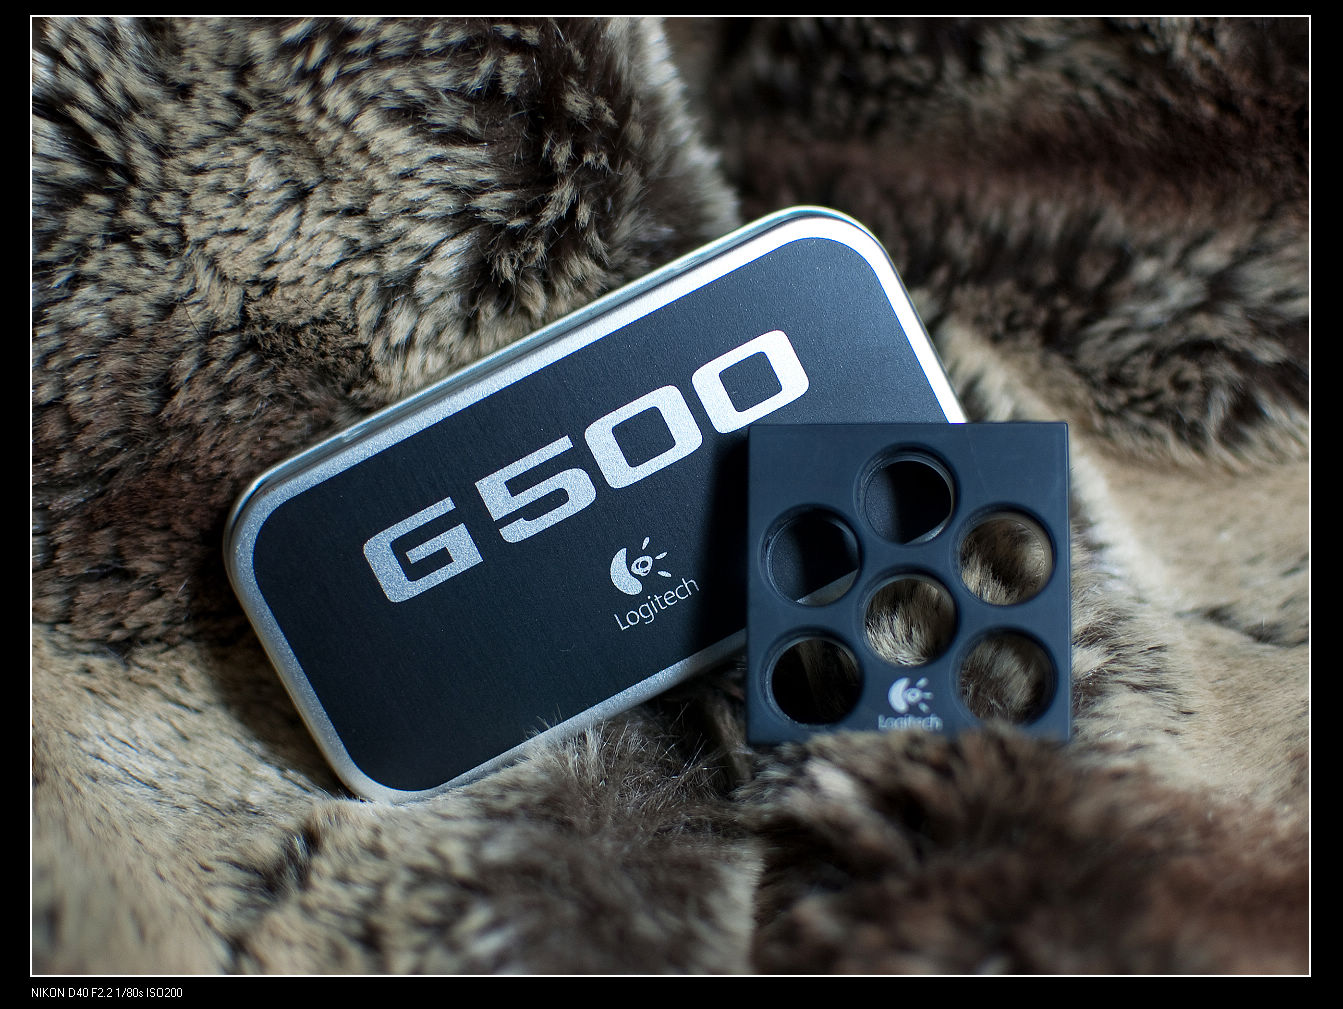 Logitech G500 Gaming Moues